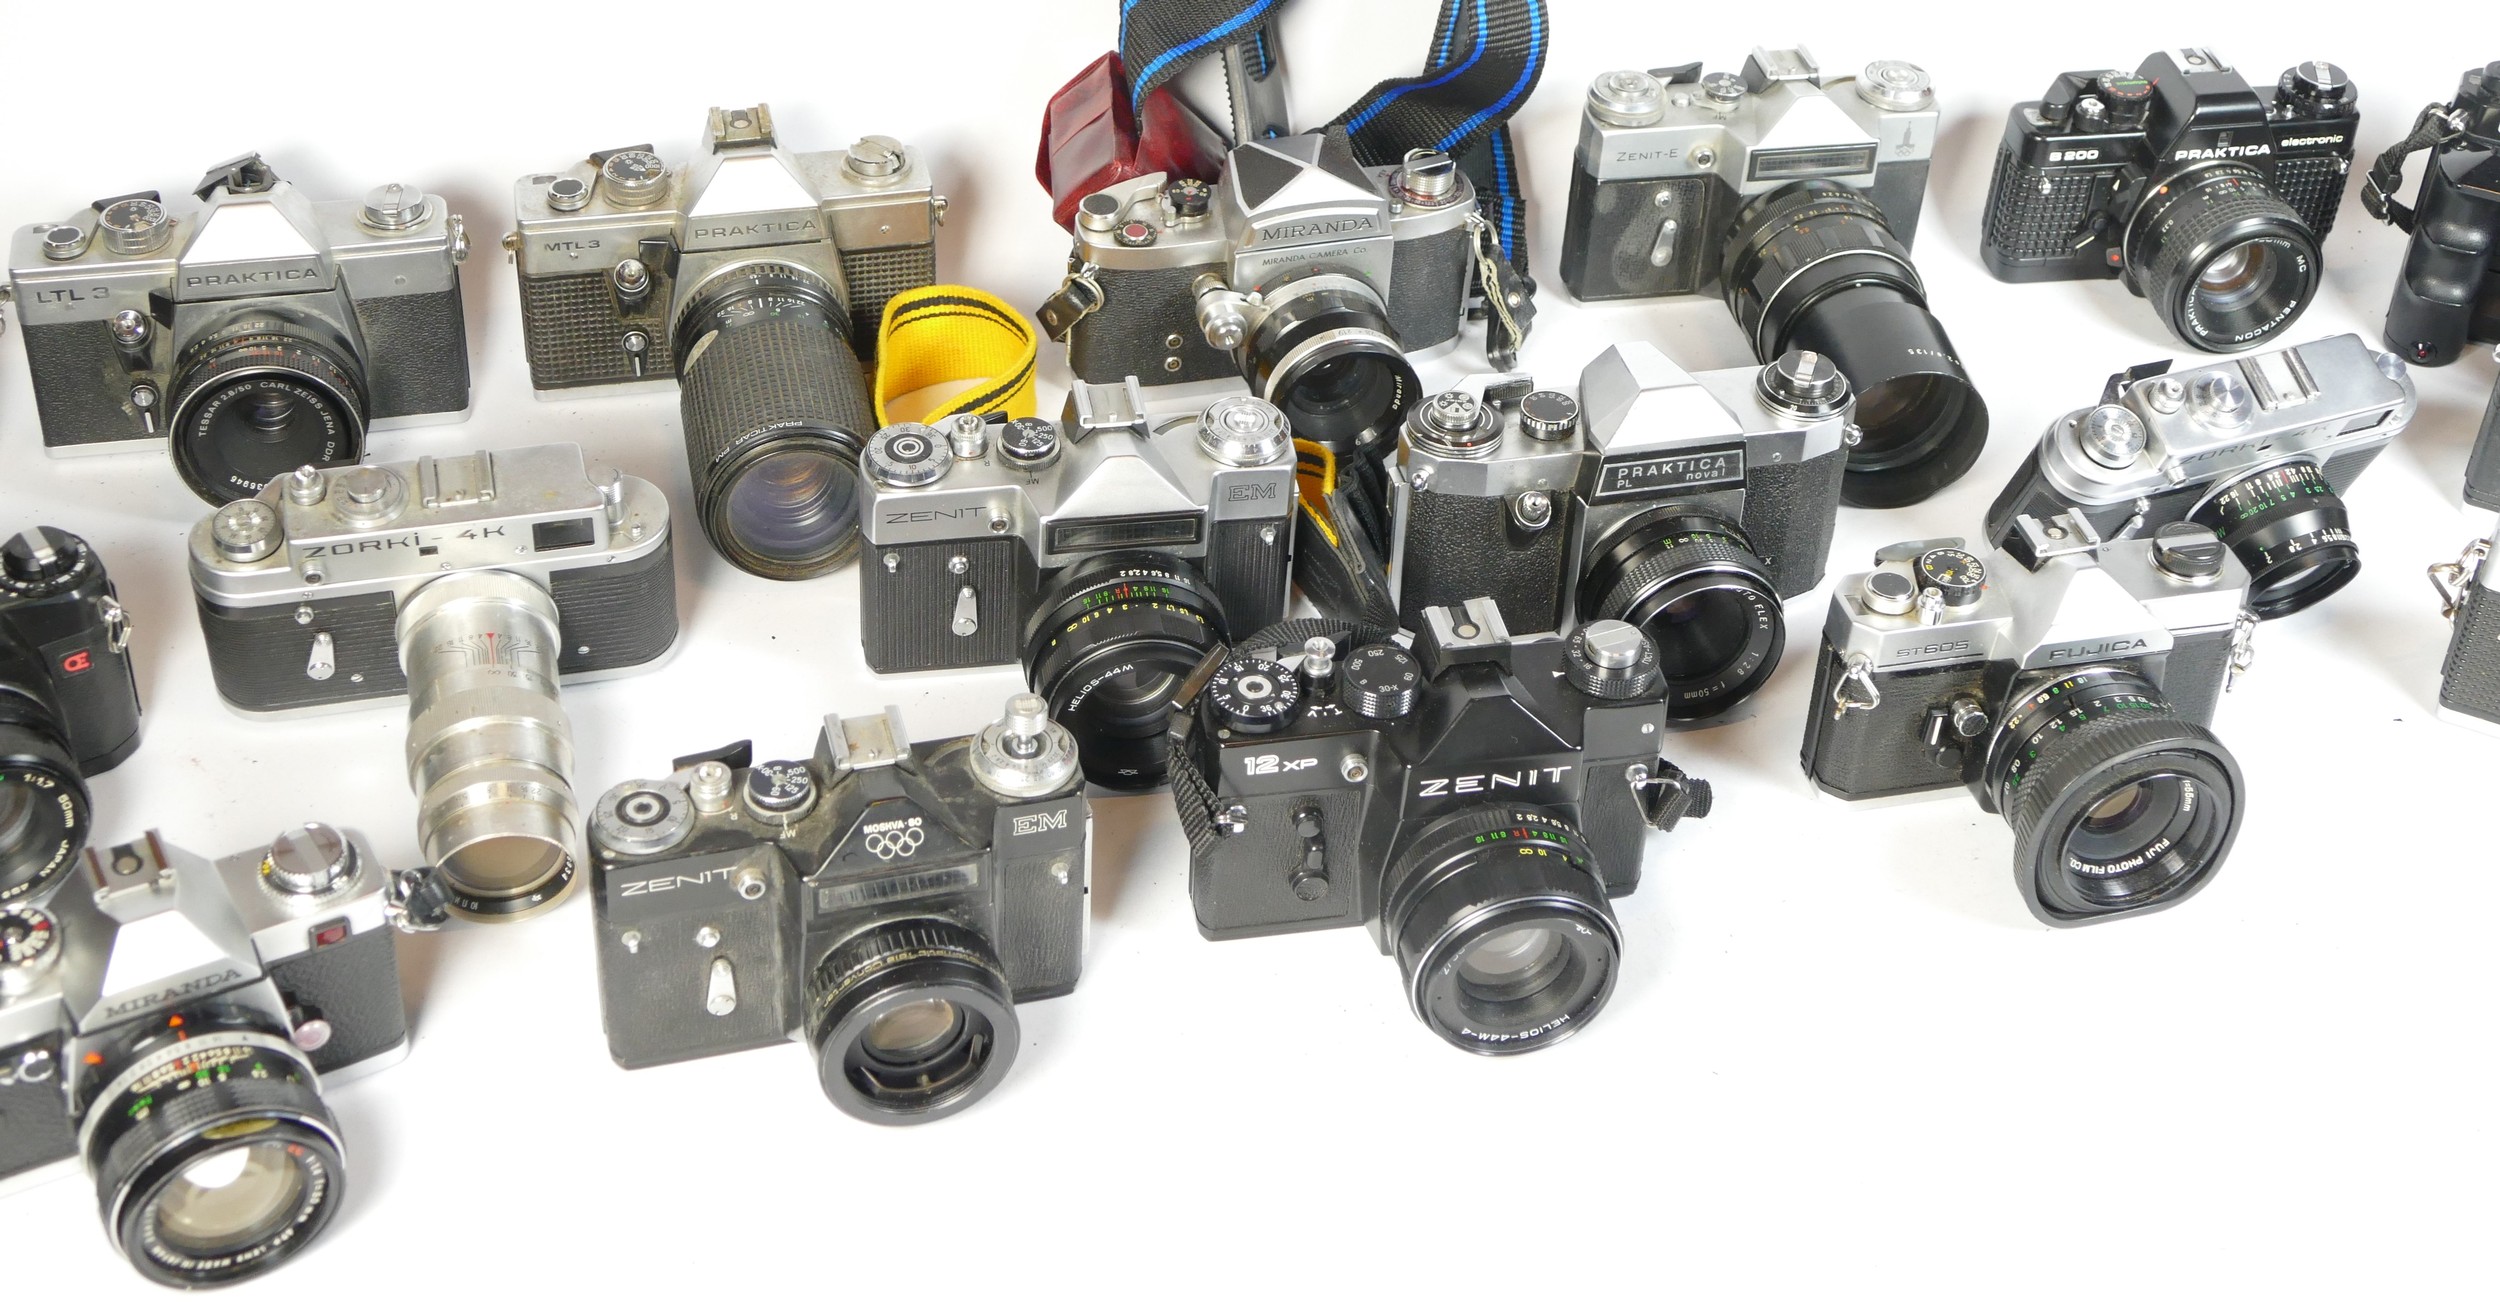 Nineteen SLR vintage film cameras to include a Zenit 12xp, a Chinon CE-5, a Praktica Nova II and a - Bild 2 aus 2